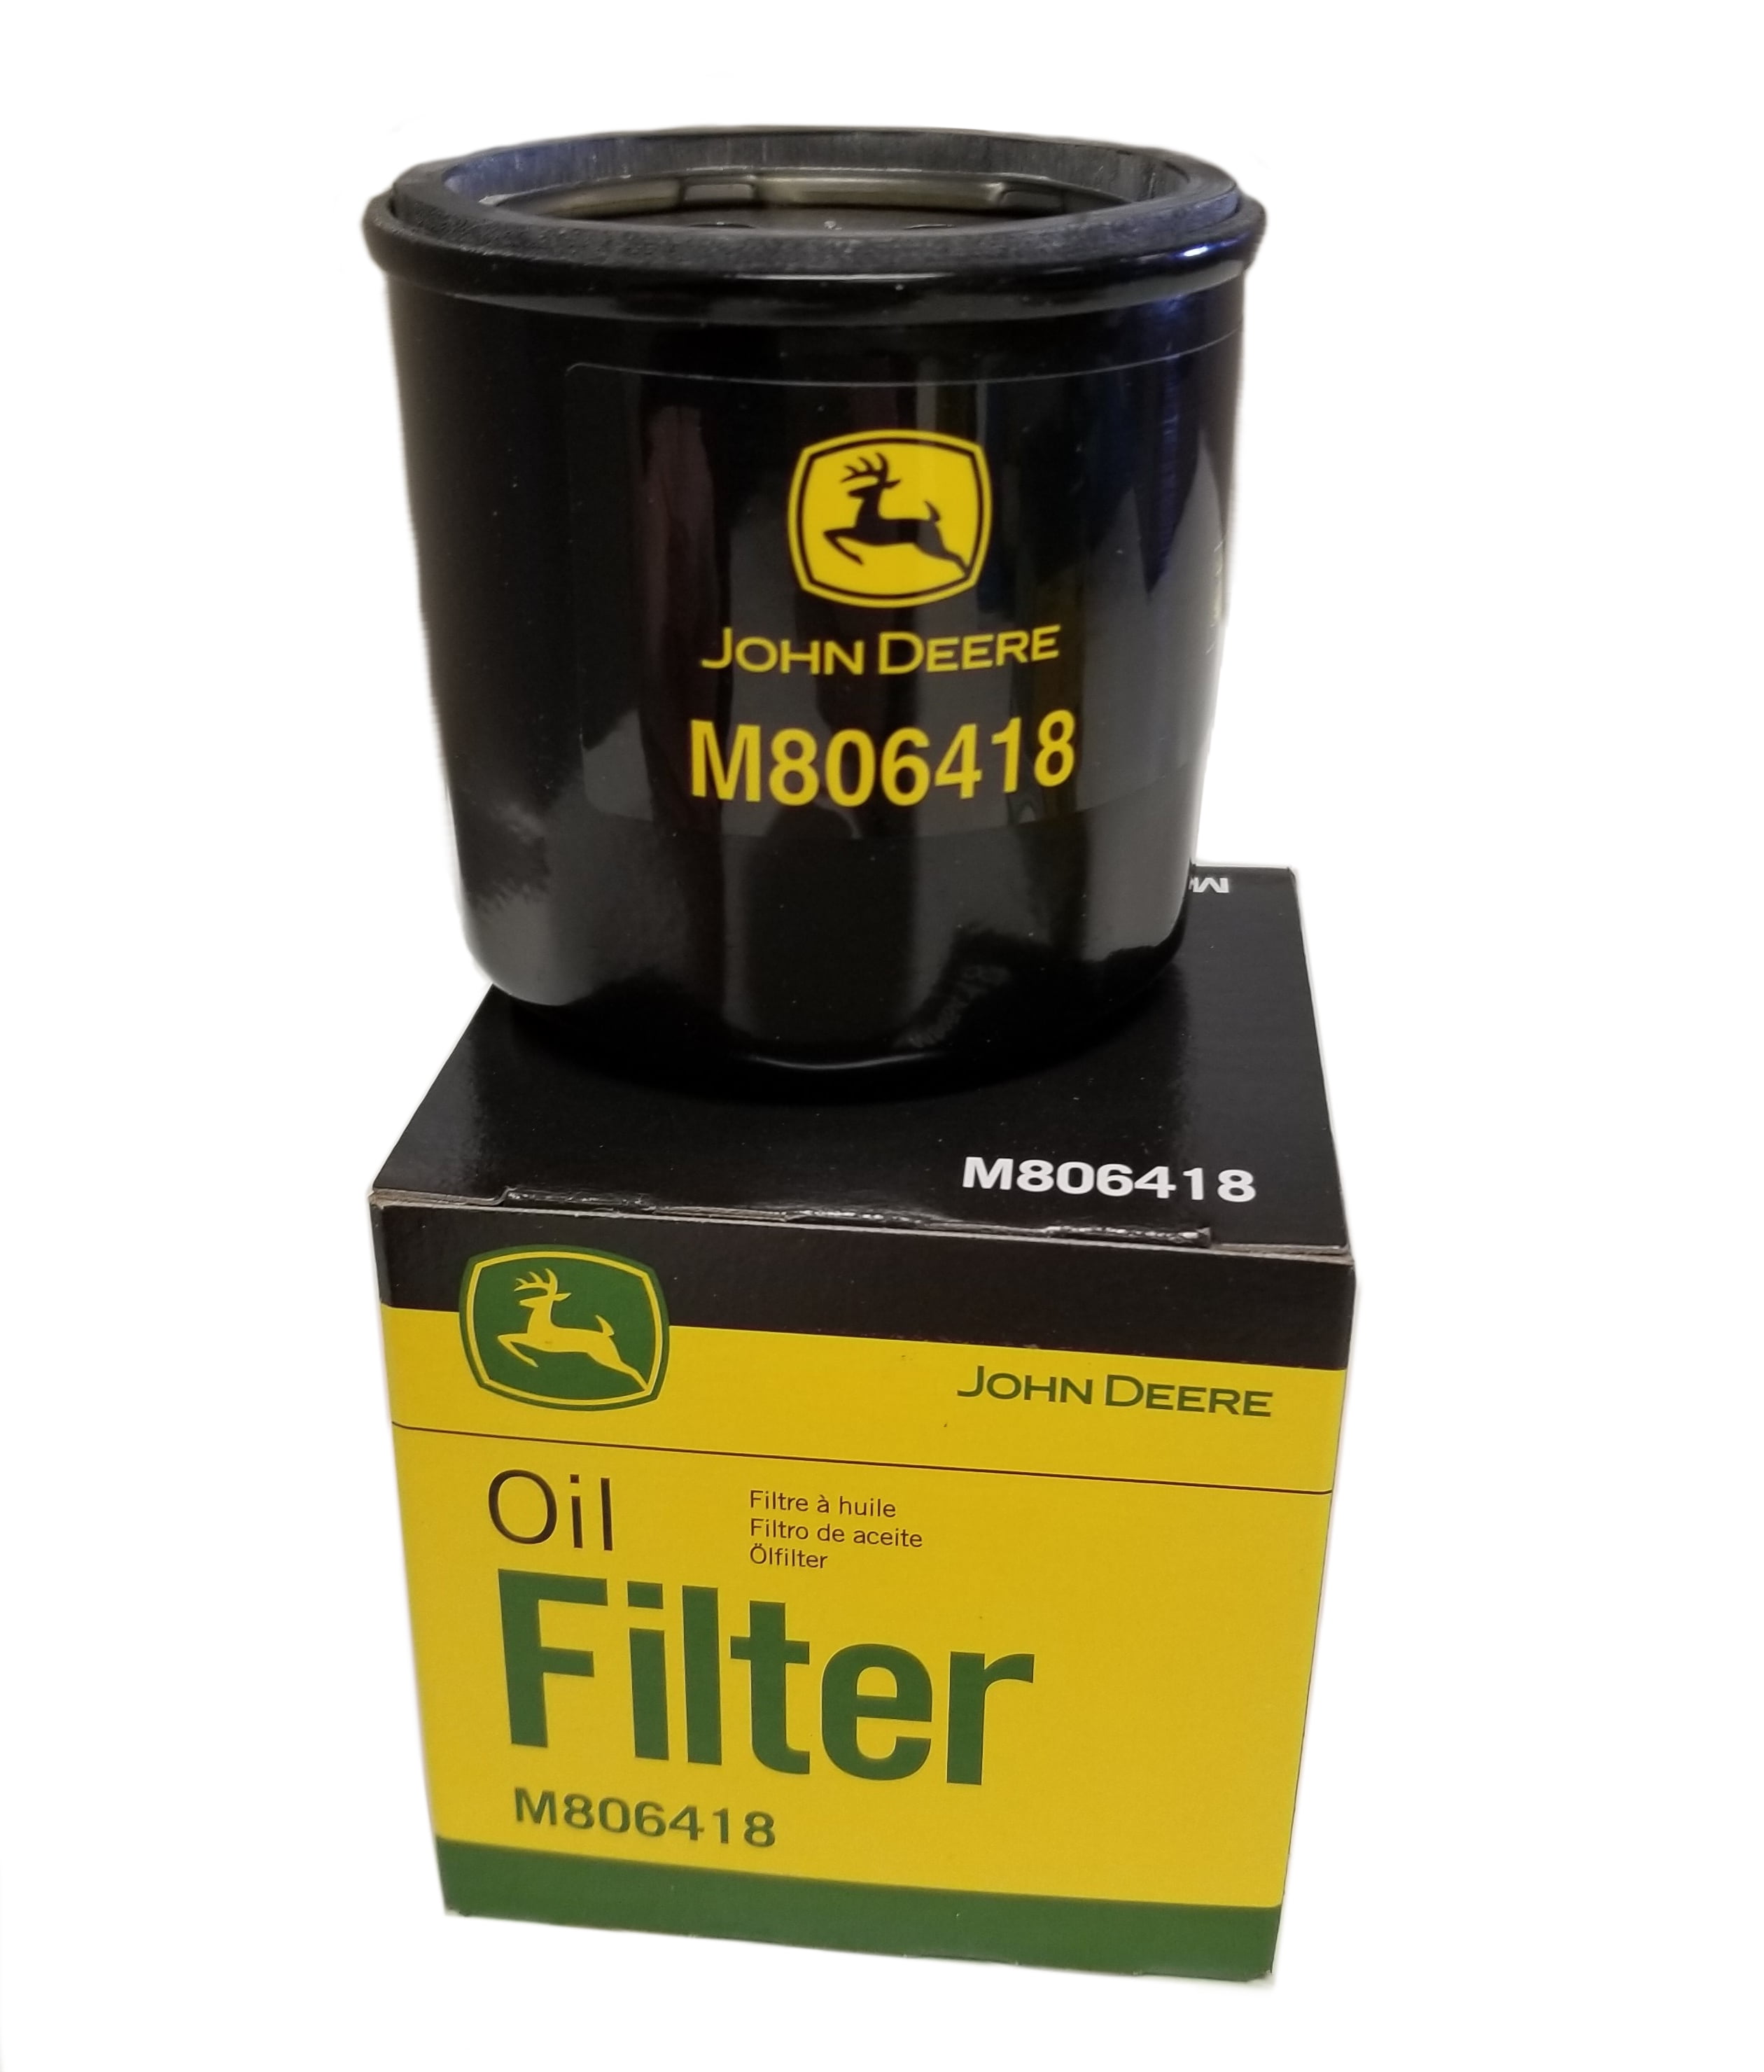 John Deere Original Equipment Oil Filter 2 Pack M806418